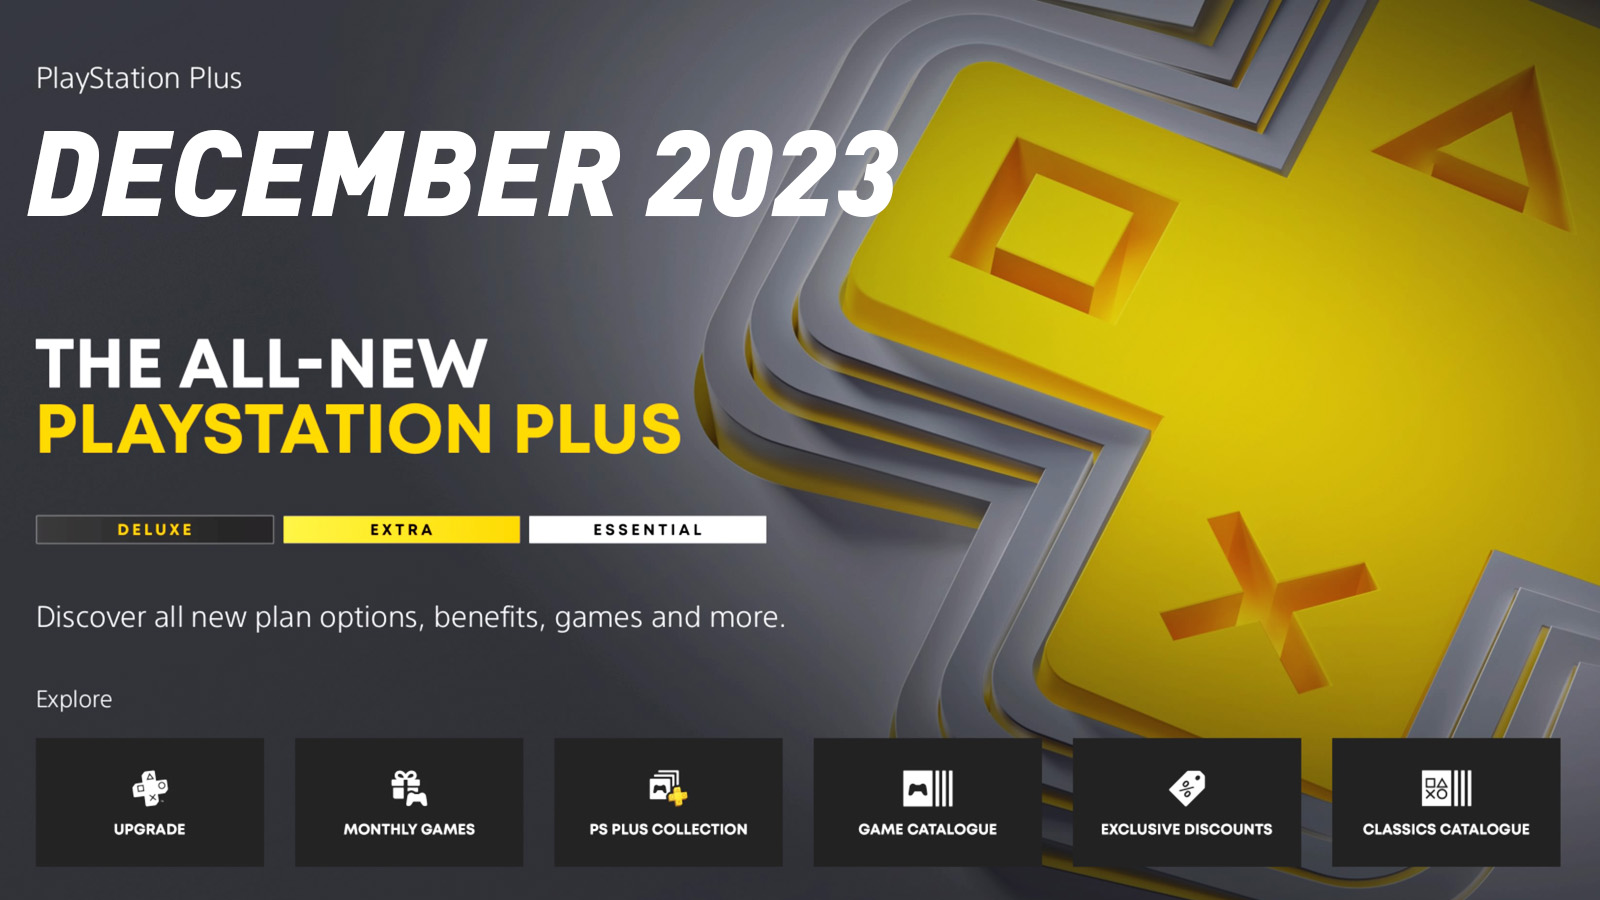 PlayStation Plus: Free Games in December 2023